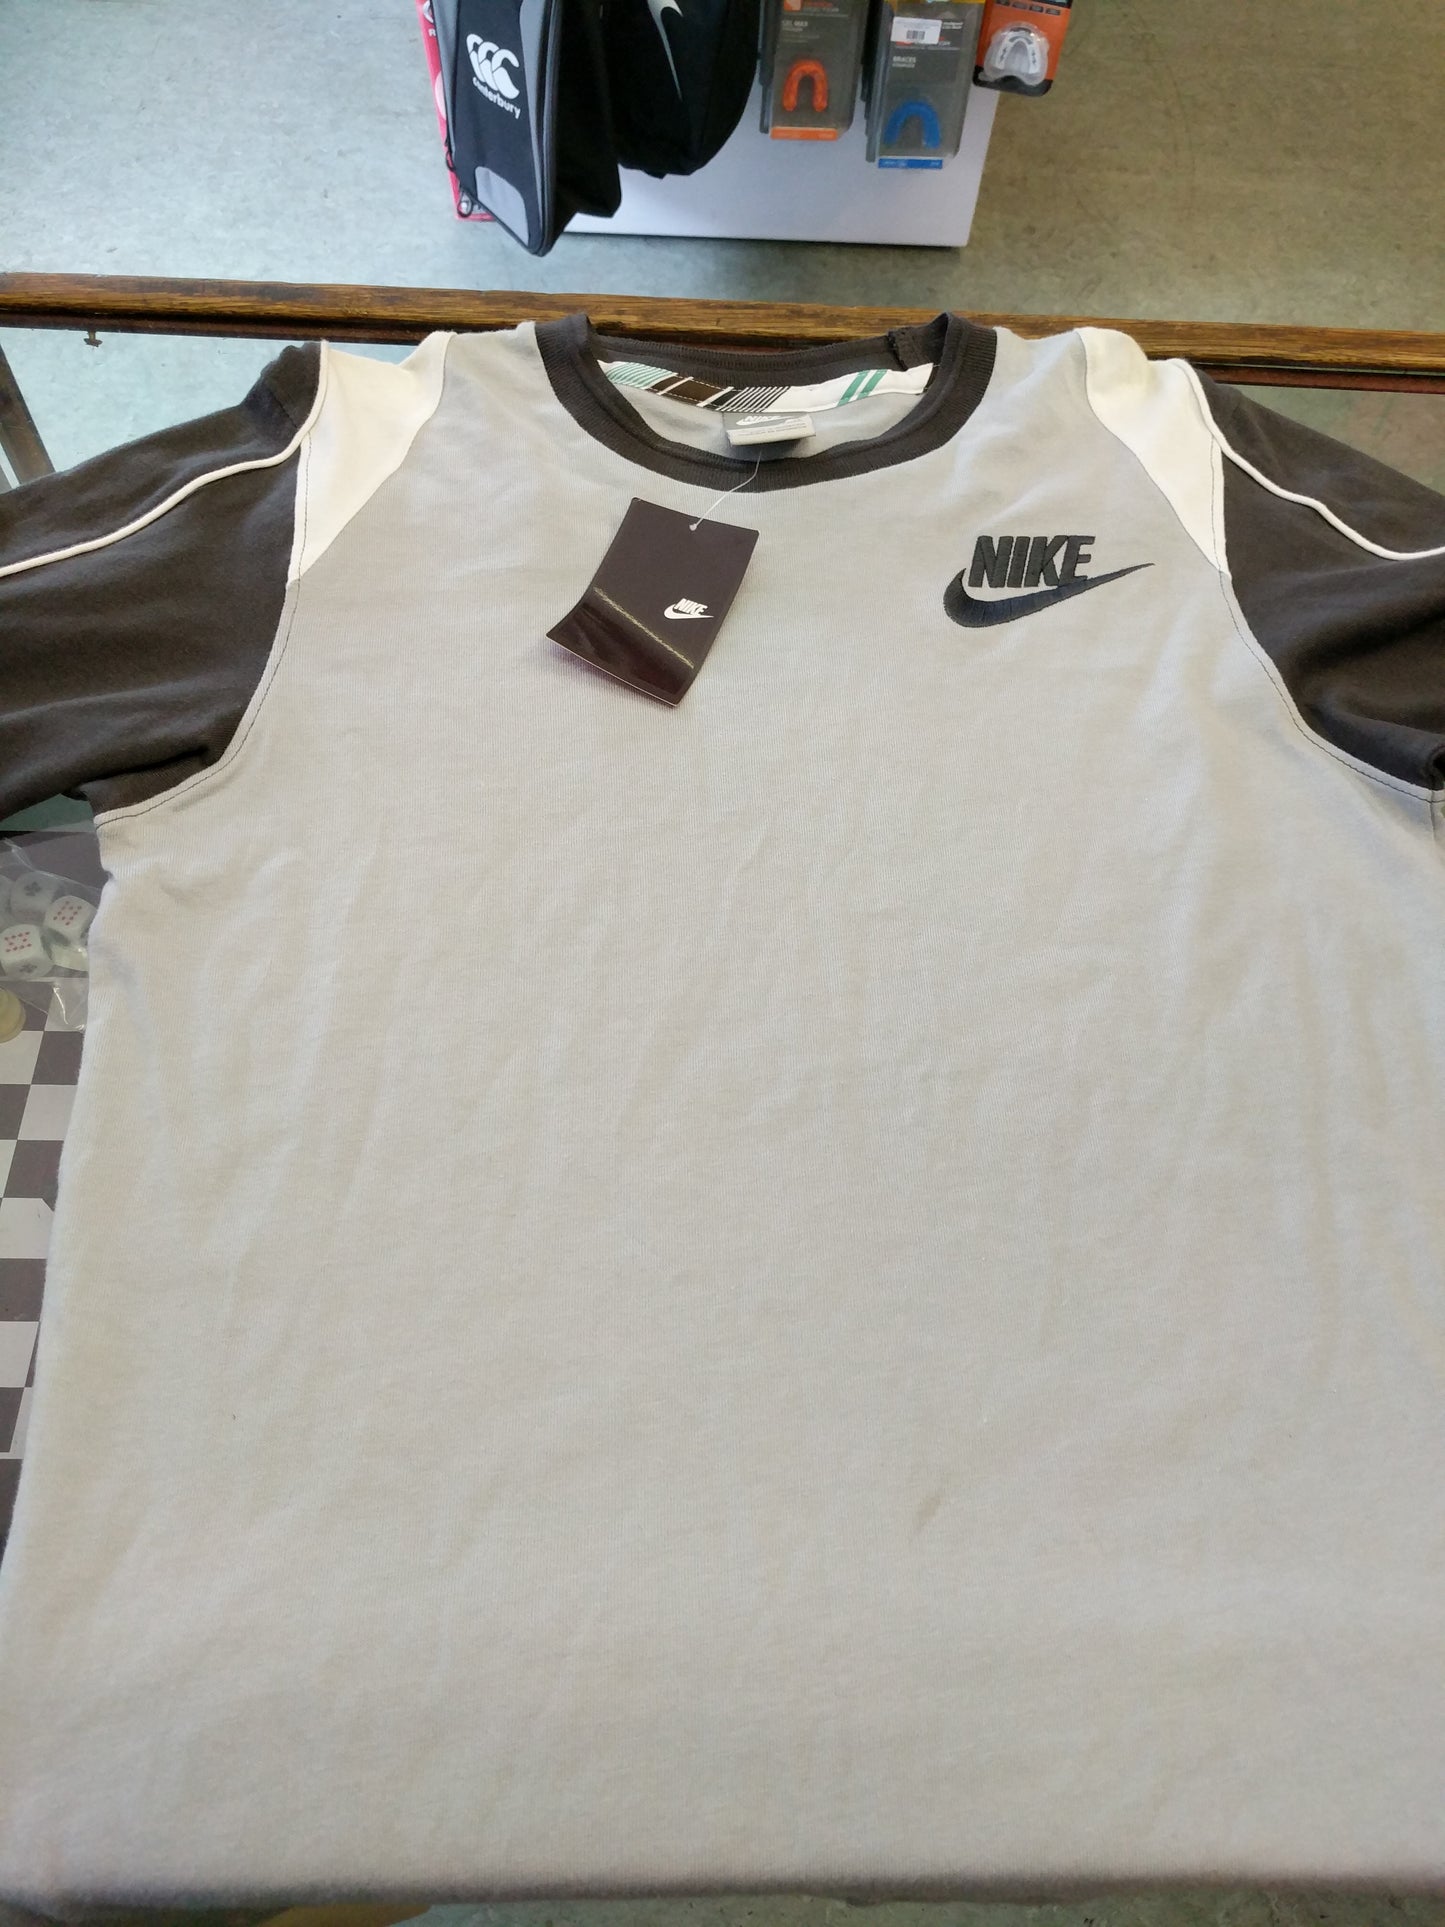 Nike short sleevd grey and white mens shirt size small